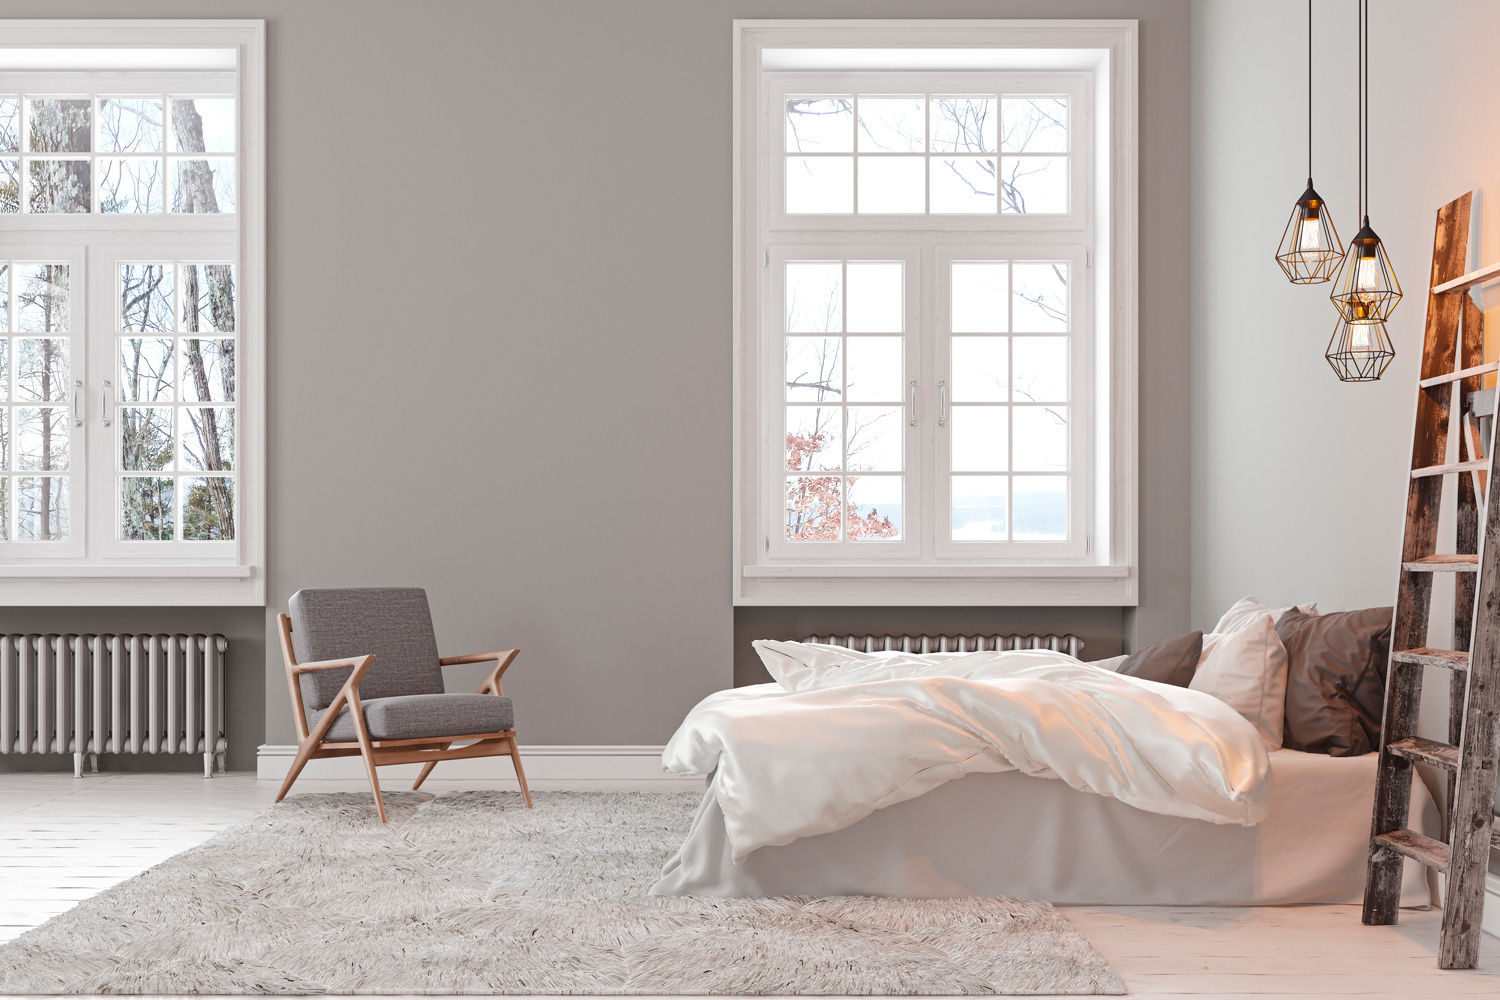 Scandinavin loft gray empty bedroom interior with armchair, bed and lamp. 